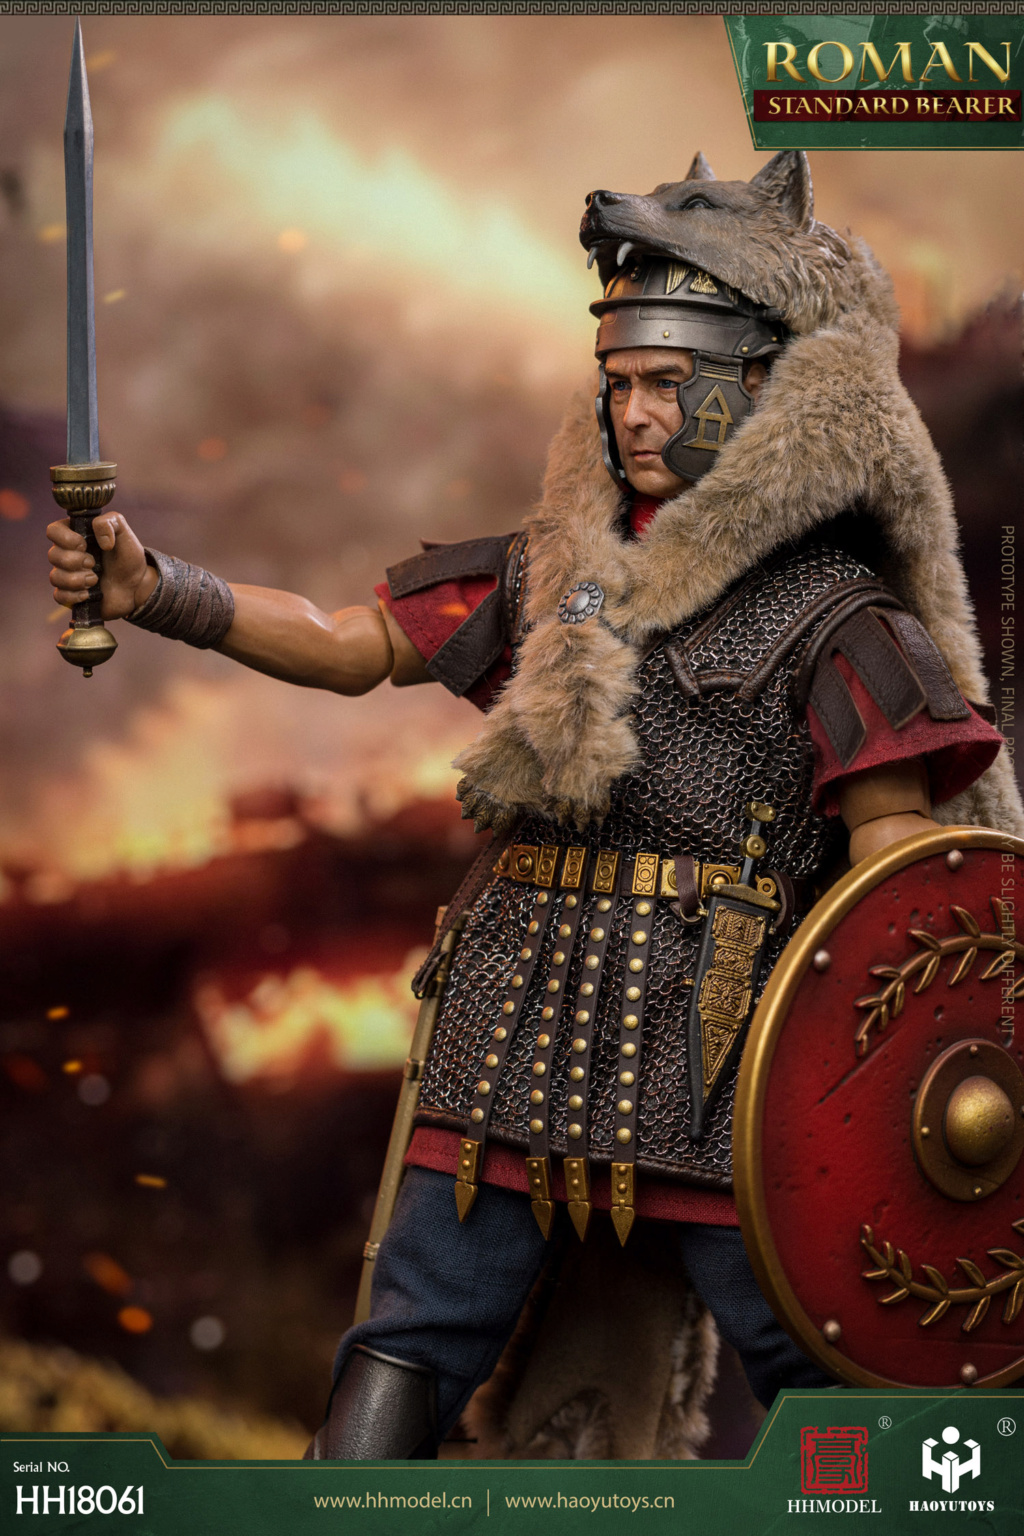 Haoyutoys - NEW PRODUCT: HHModel & HaoYuToys: 1/6 Empire Legion - Roman Standard Bearer Action Figure #HH18061 15035910